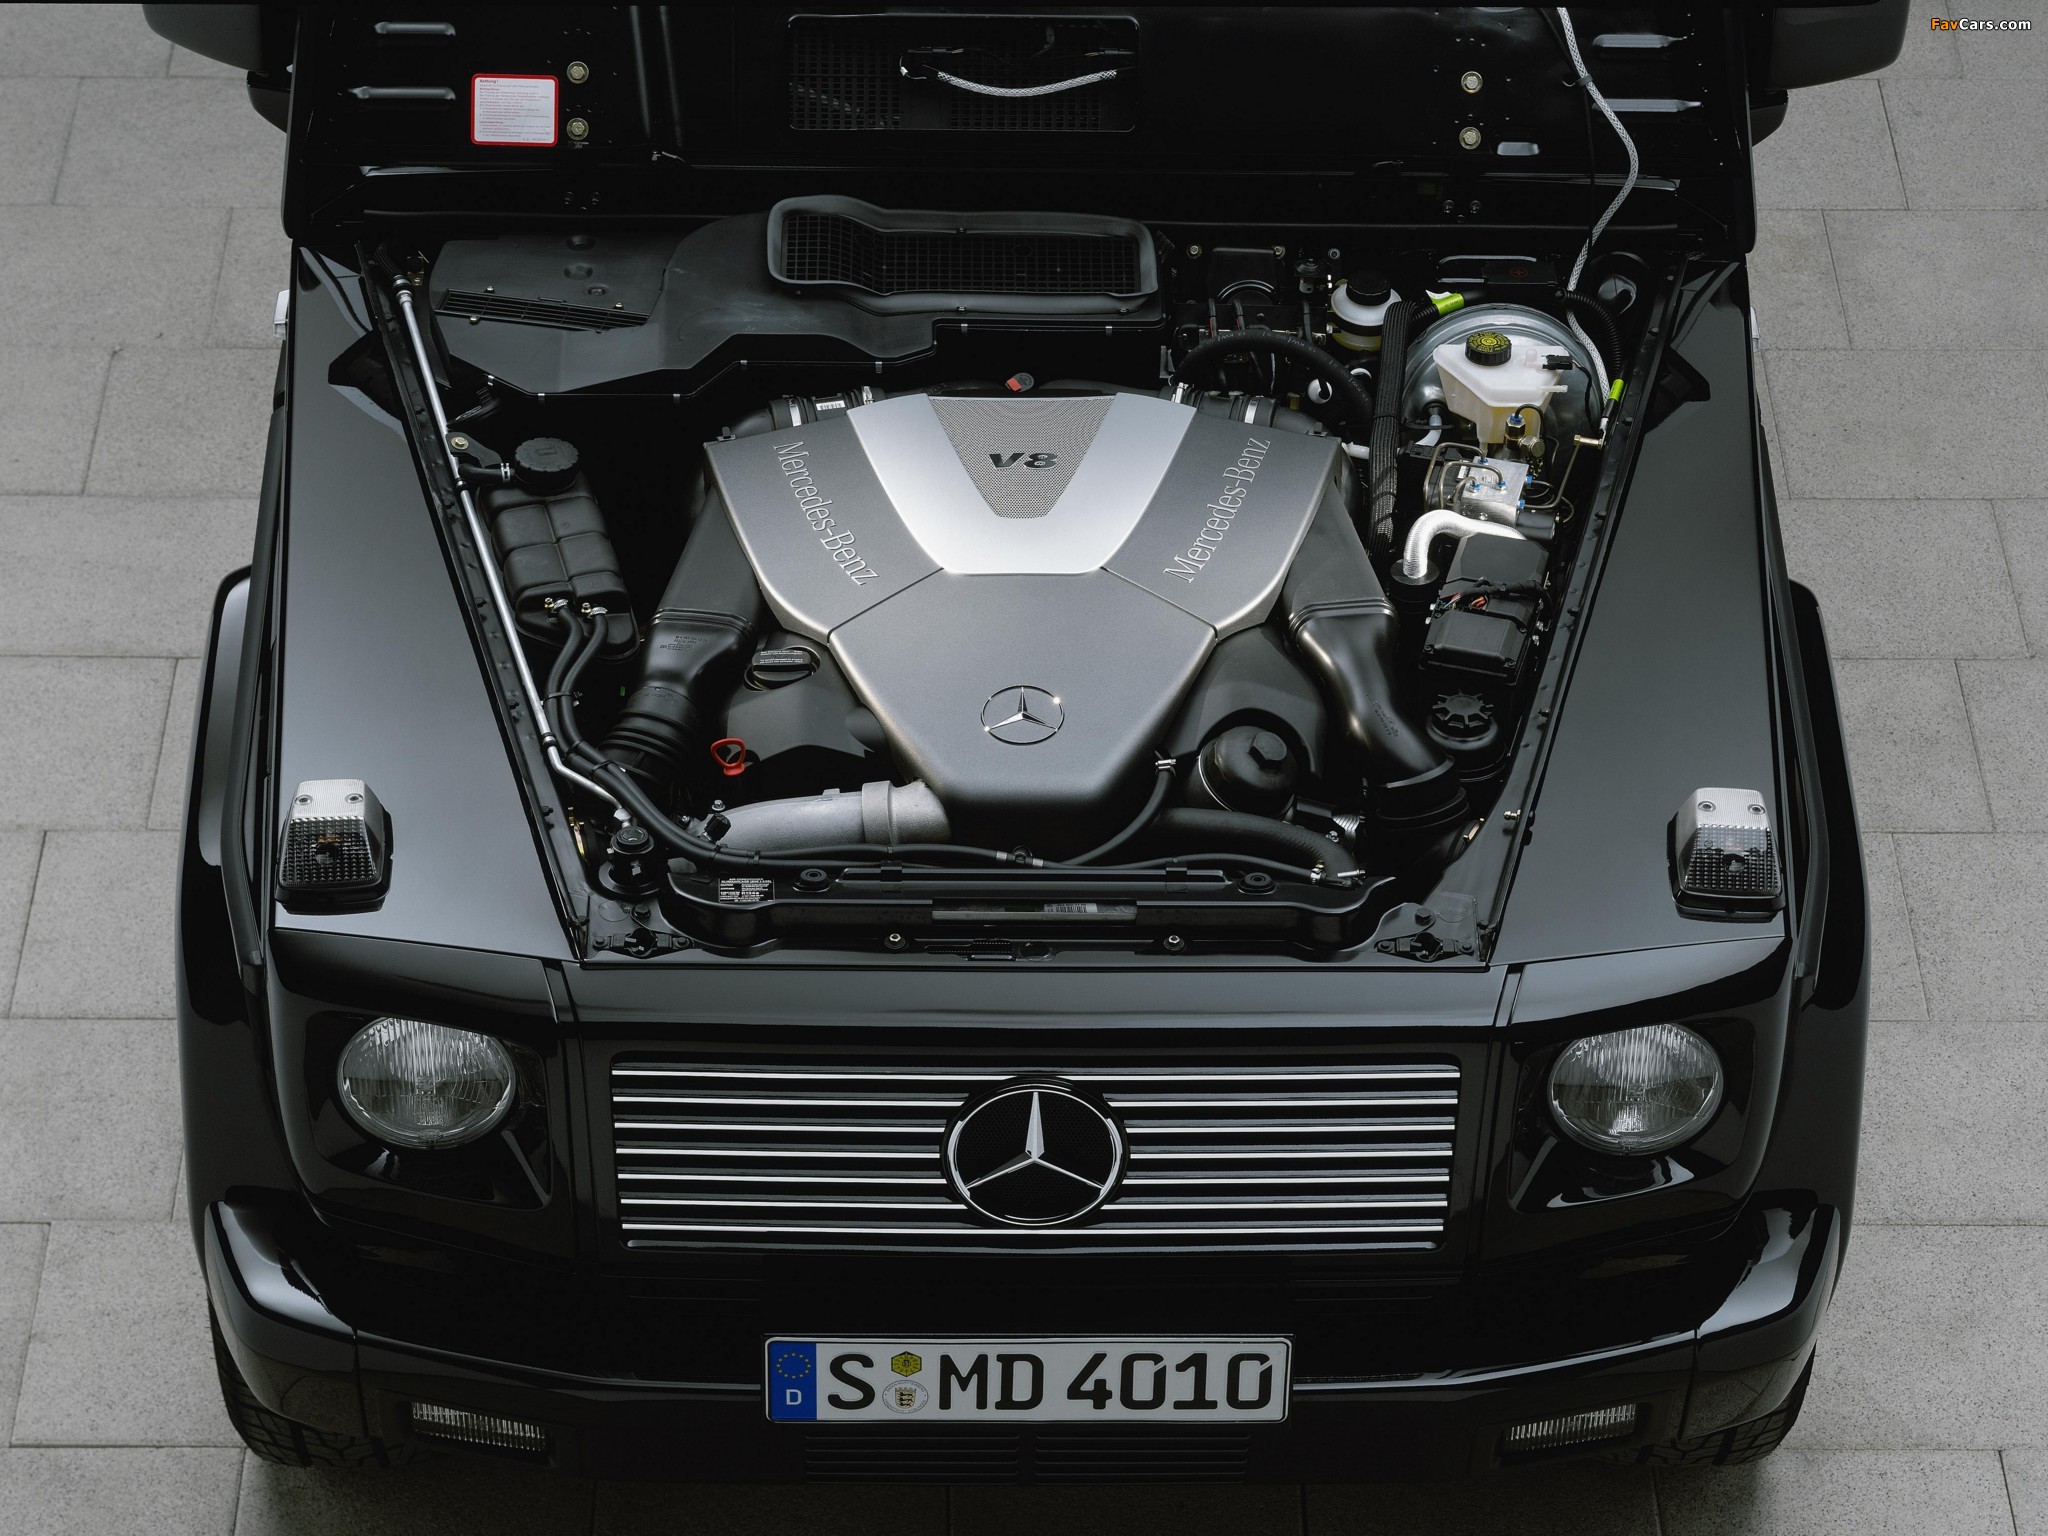 Мотор гелика. Mercedes Benz g400 CDI. Mercedes w463 мотор. W463 дизель мотор. Mercedes Benz g class 2002 под капотом.